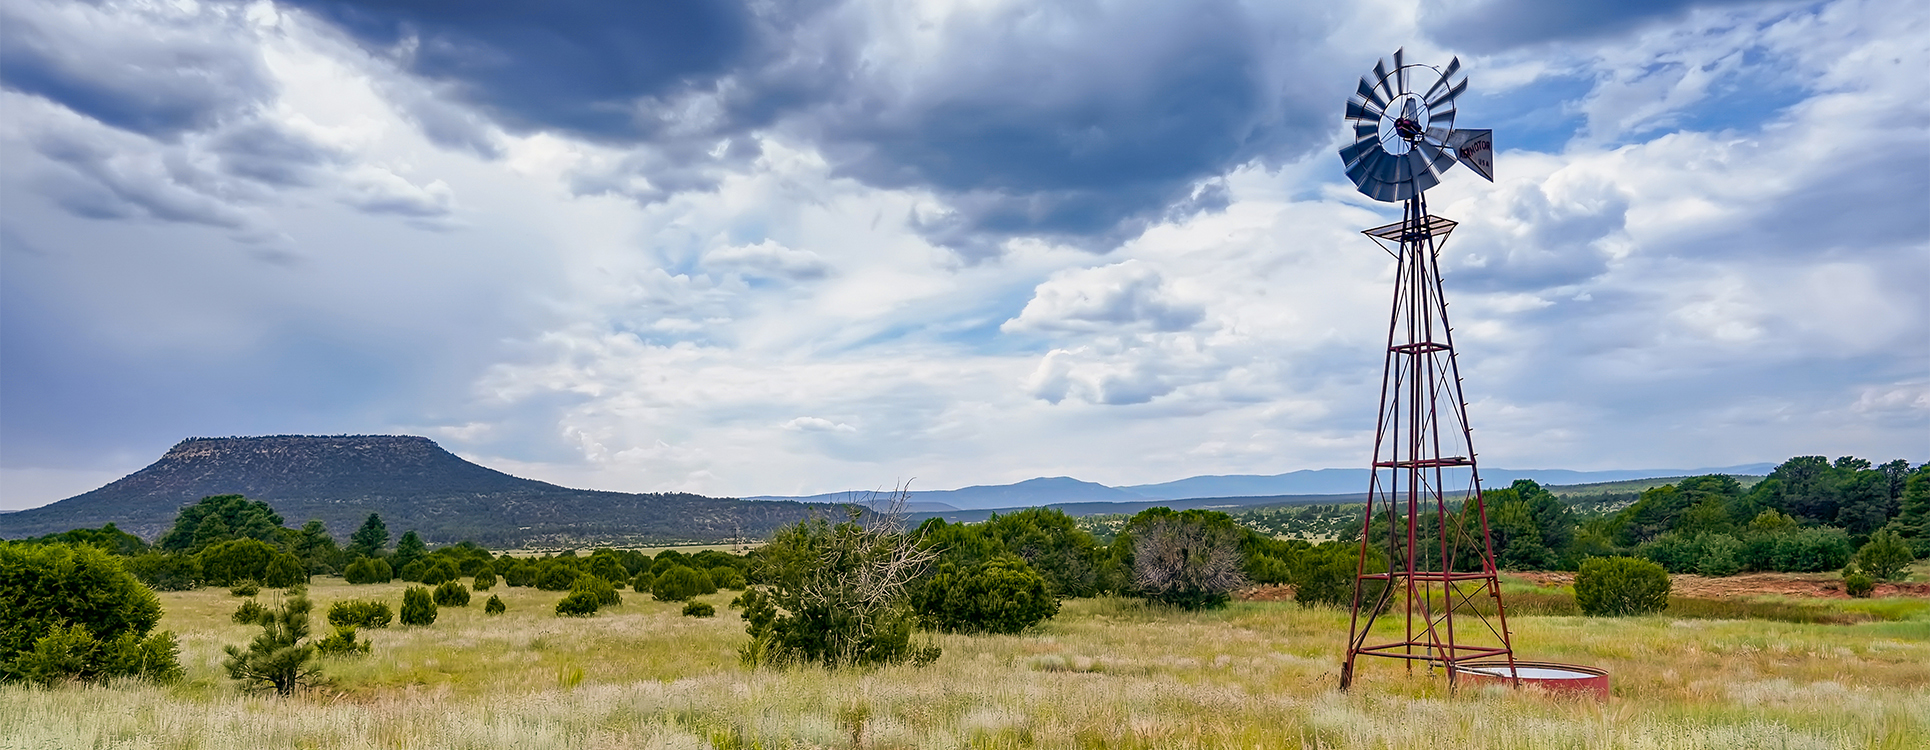 Shrubs, grasses, and beautiful hills outside of Santa Fe, NM